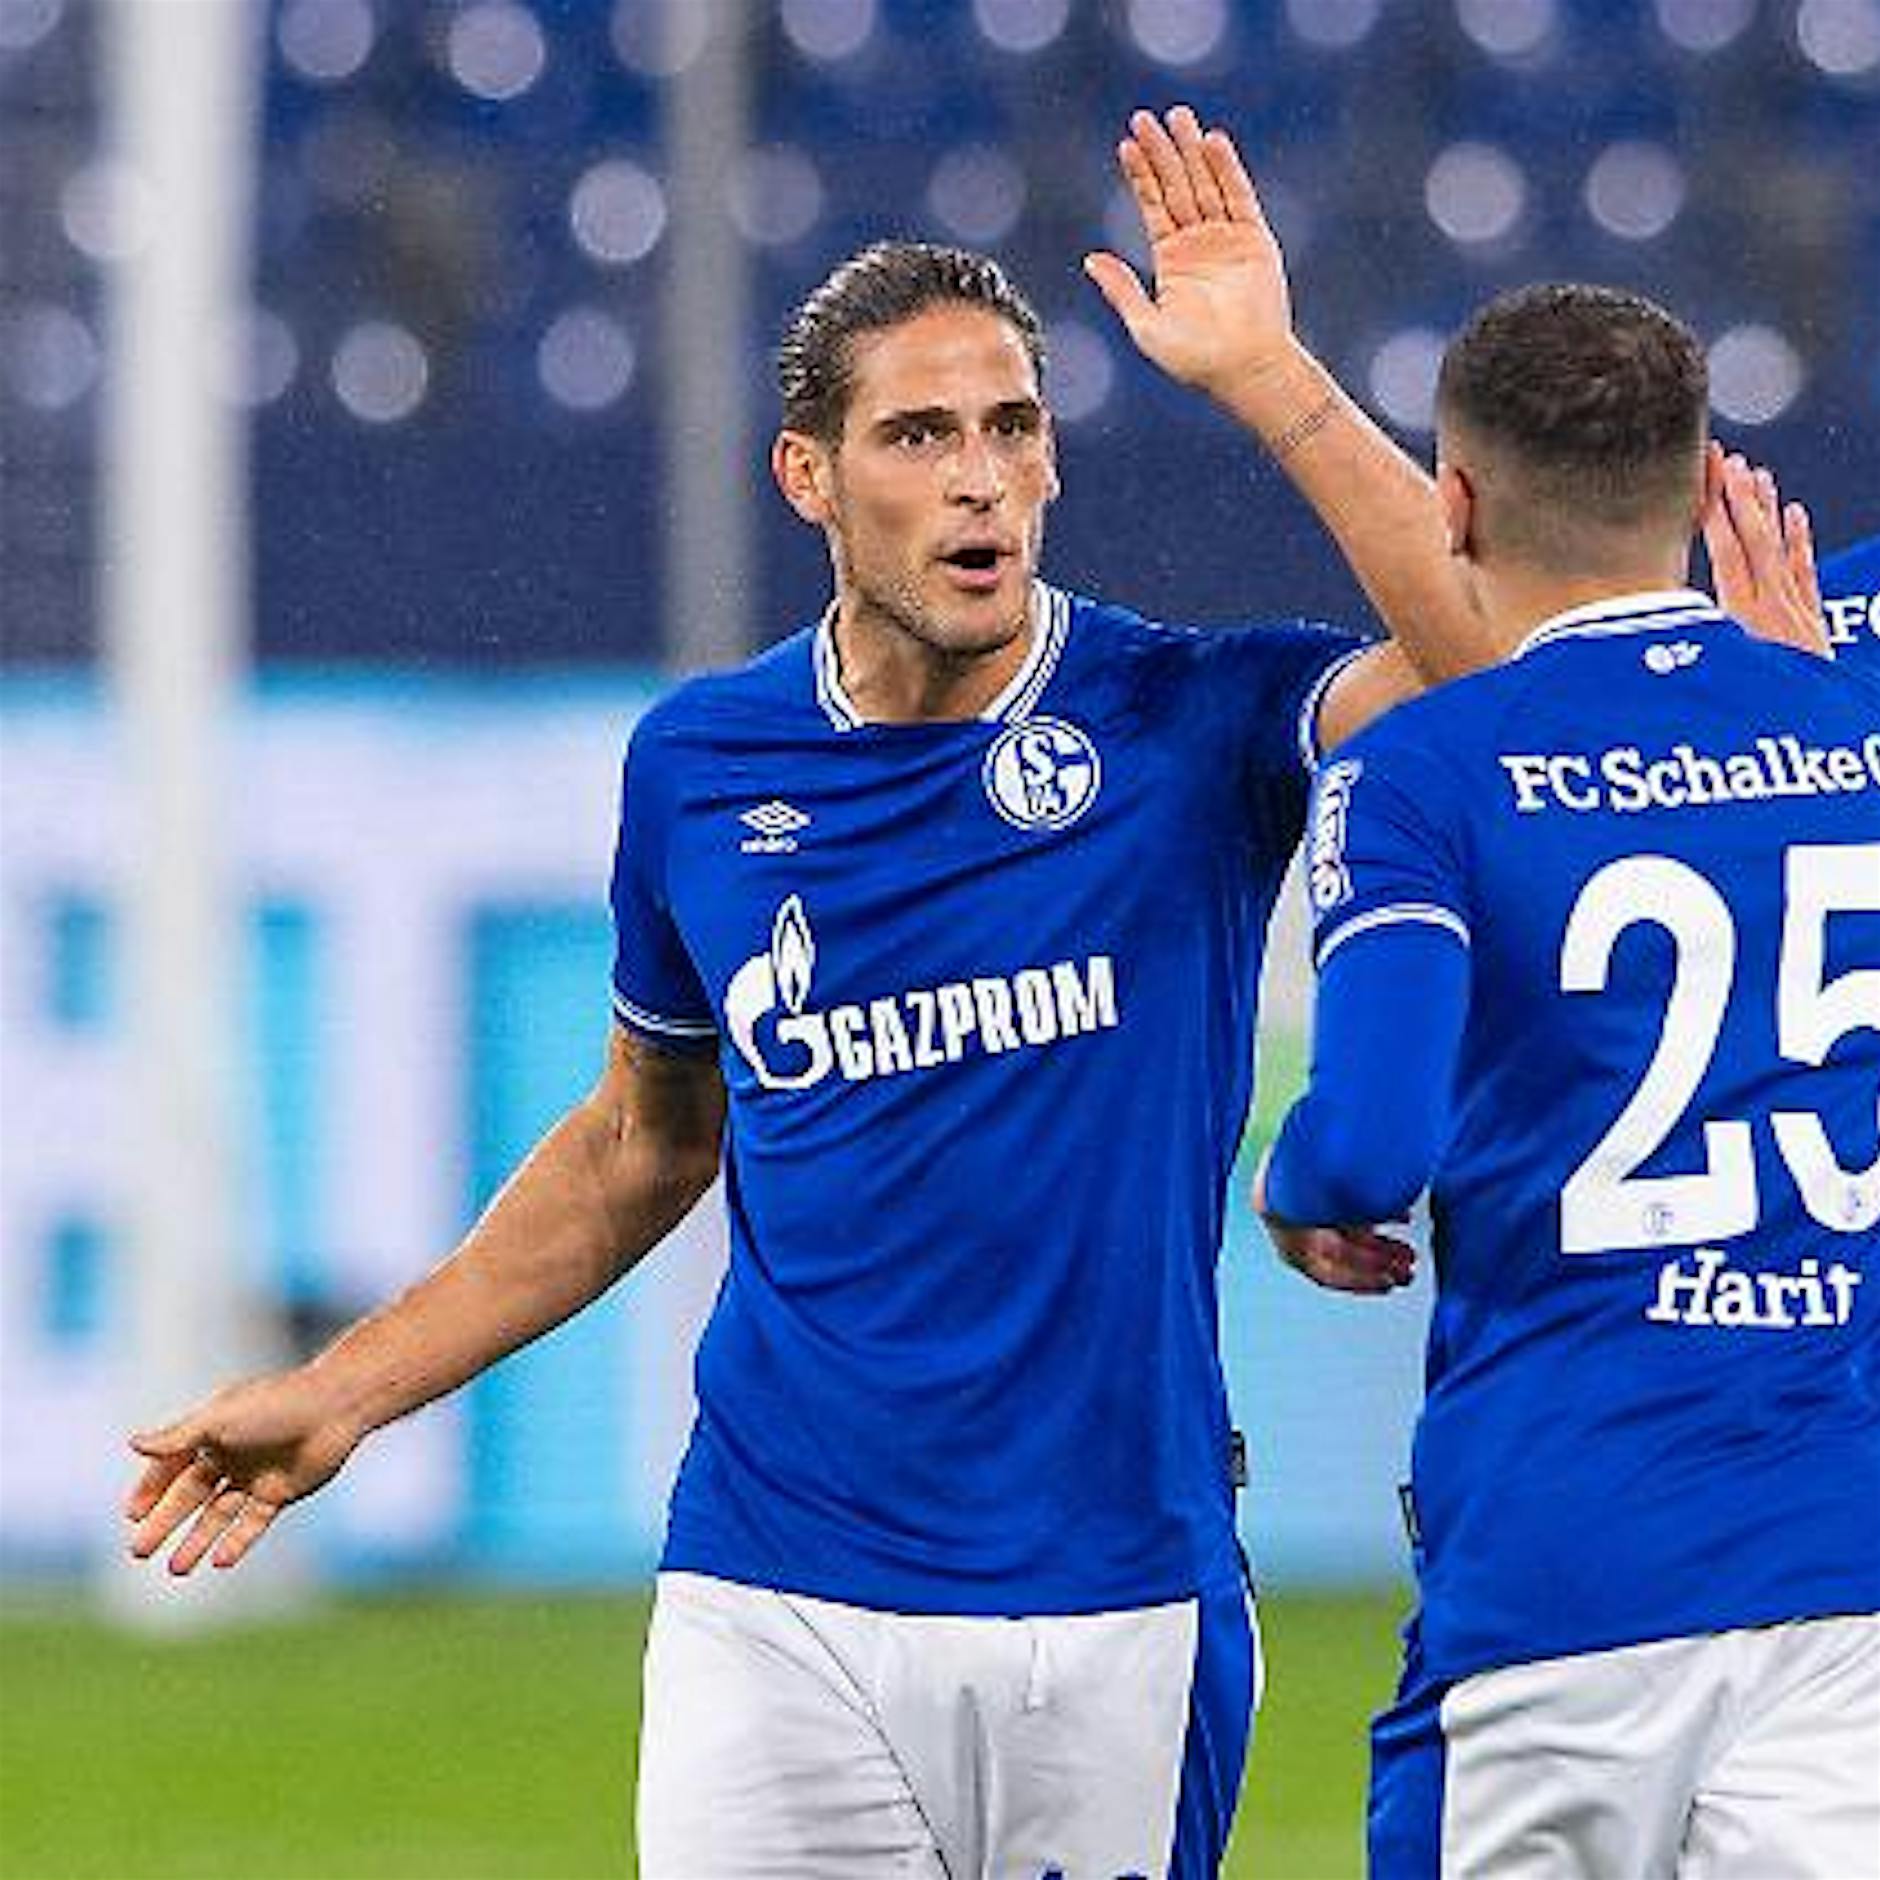 Image - Ende der Pokal-Posse: Schweinfurt spielt gegen Schalke